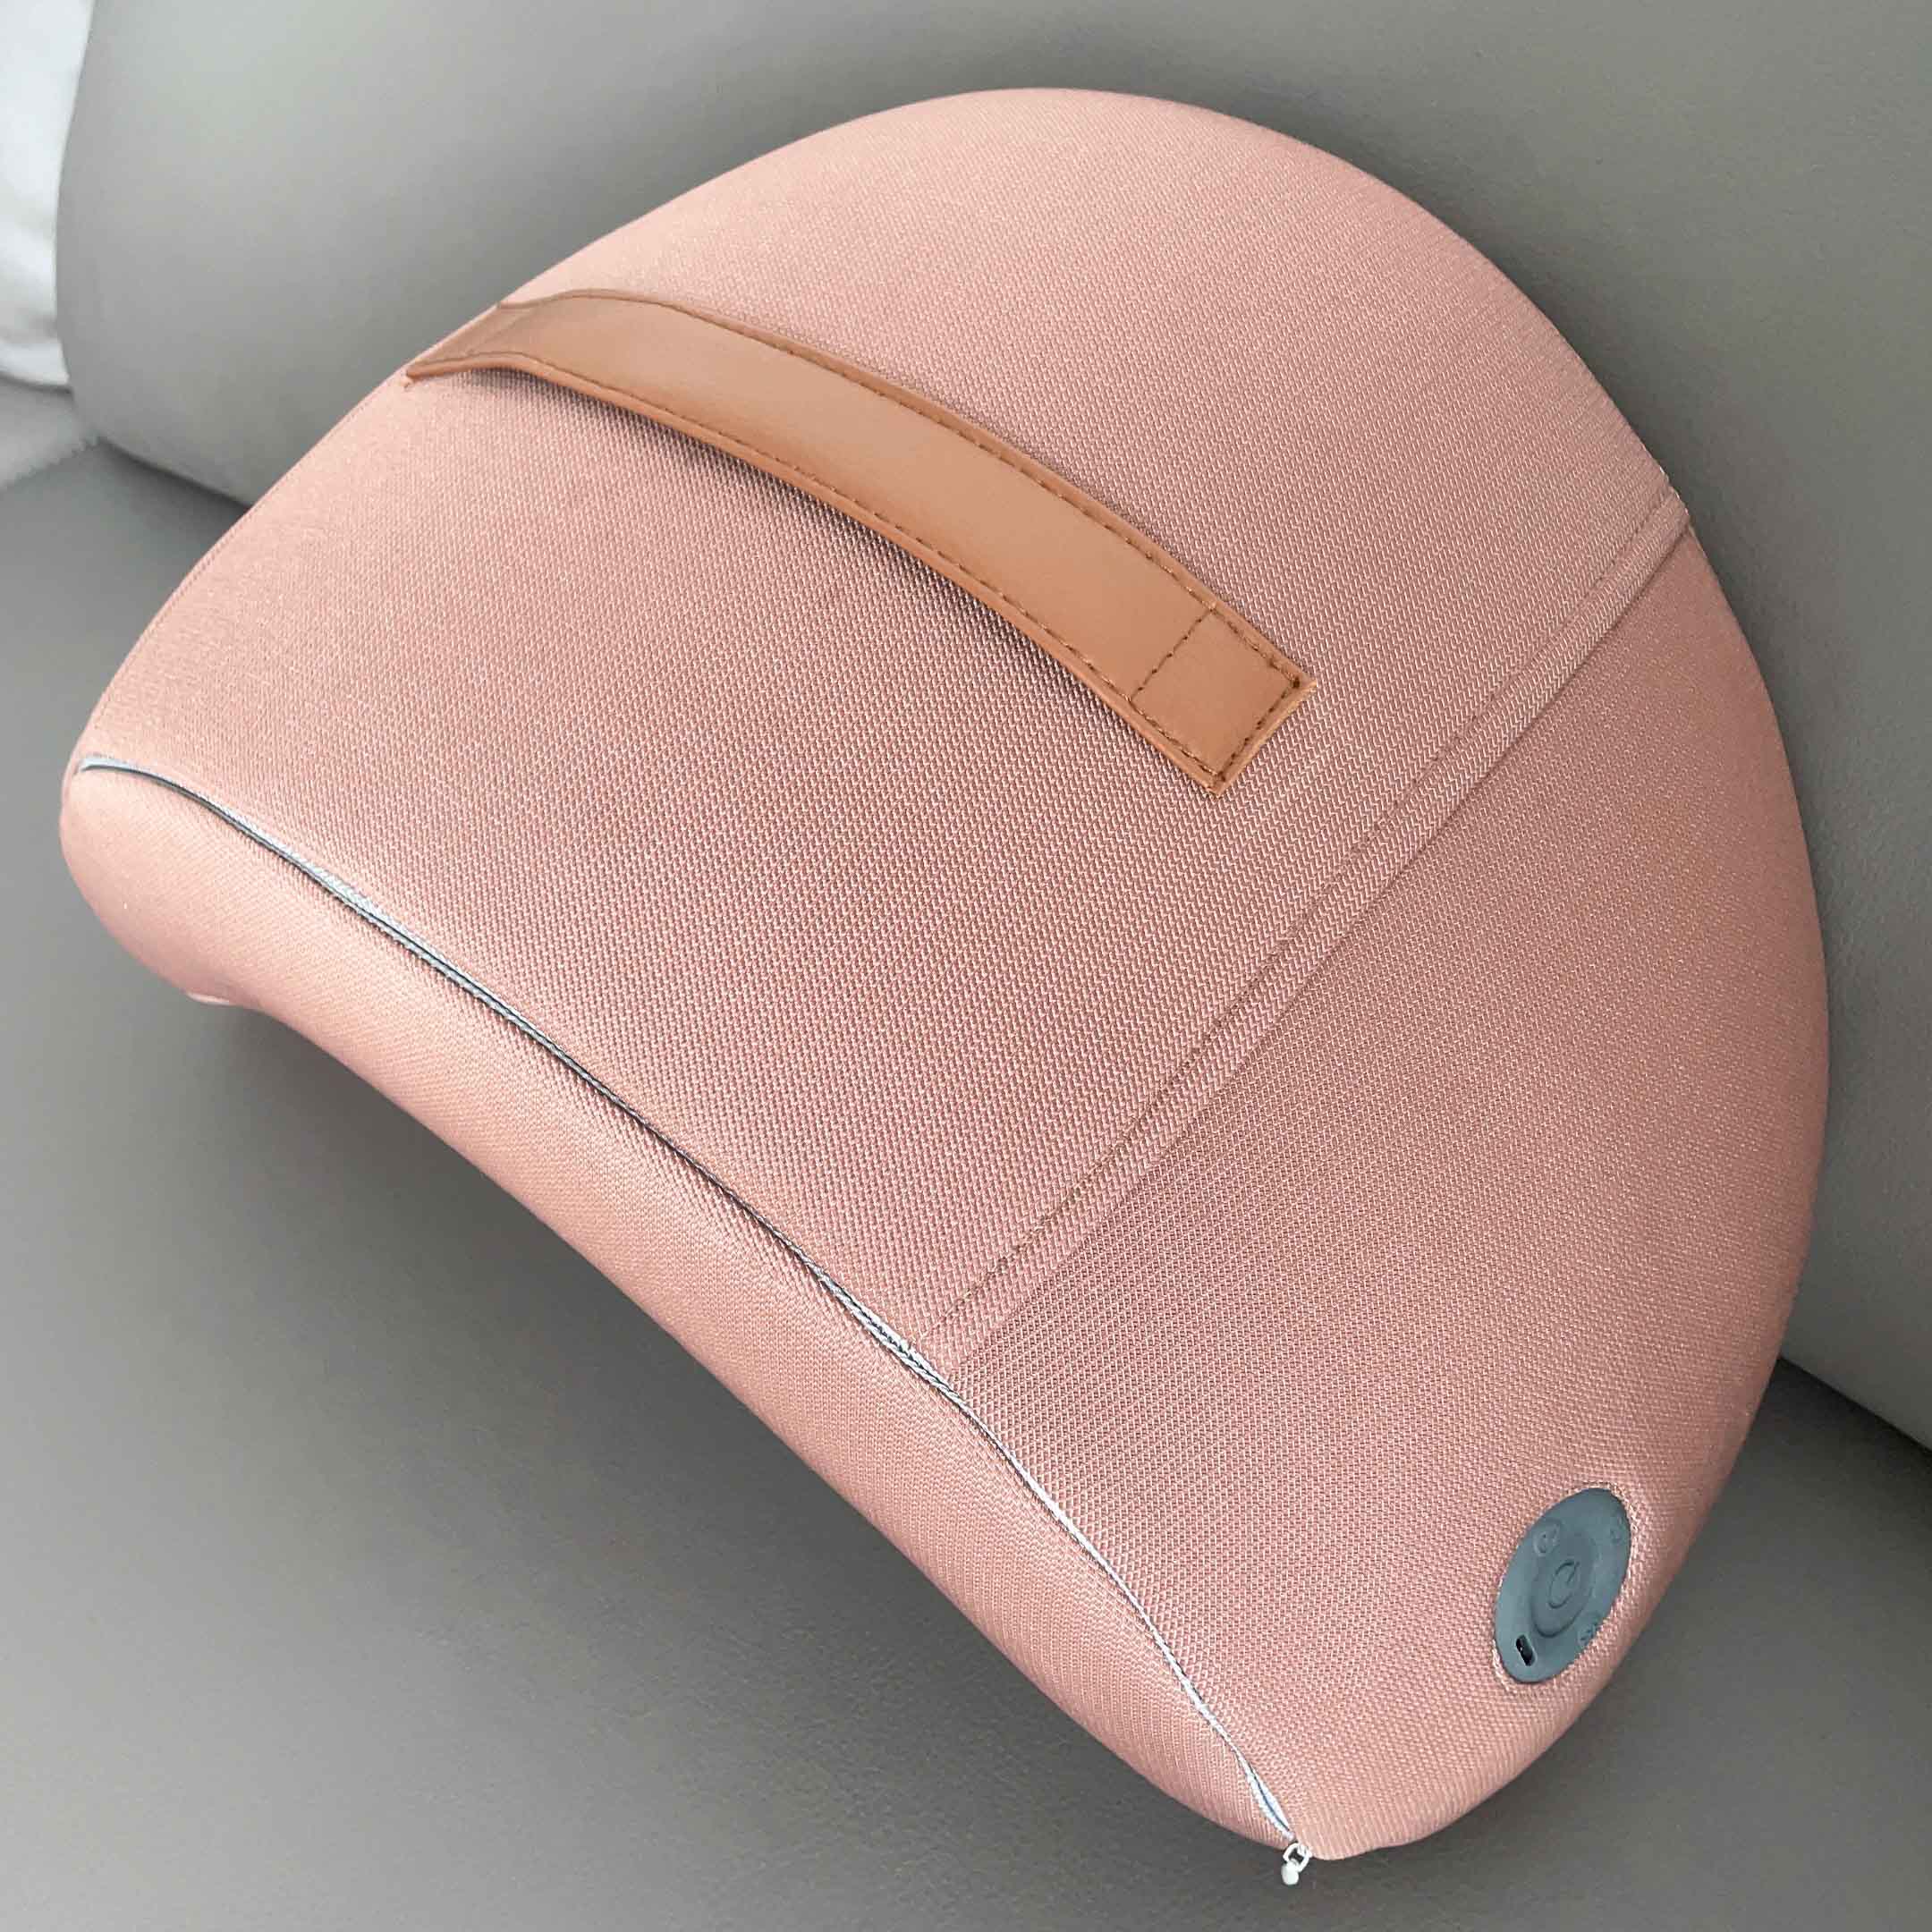 ZMIND C013 portable back and neck massager vibration back waist massager body back massage cushion